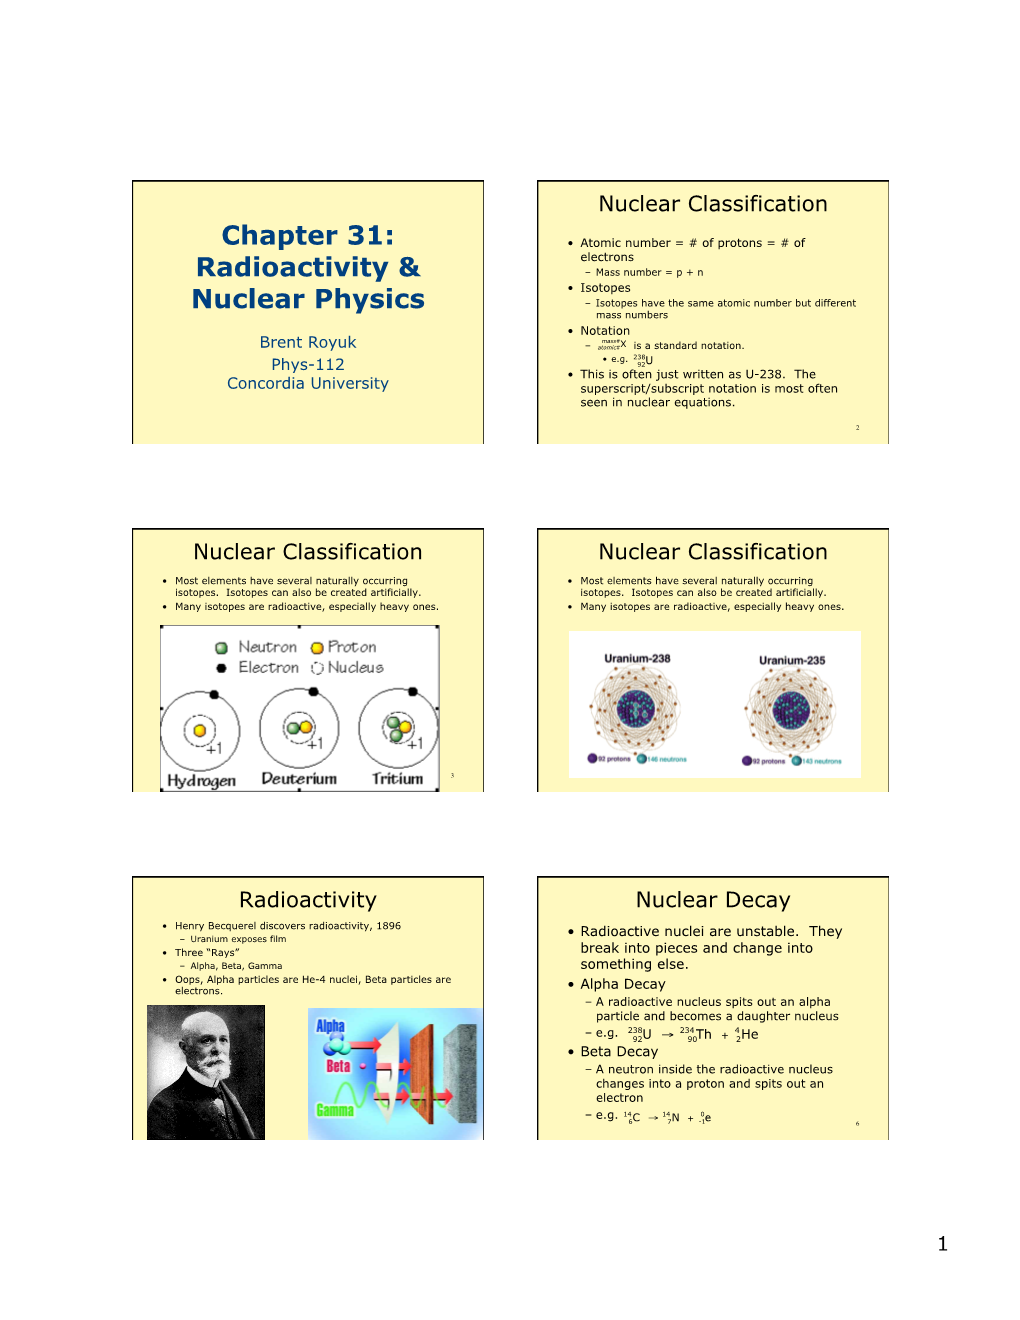 Chapter 31: Radioactivity & Nuclear Physics